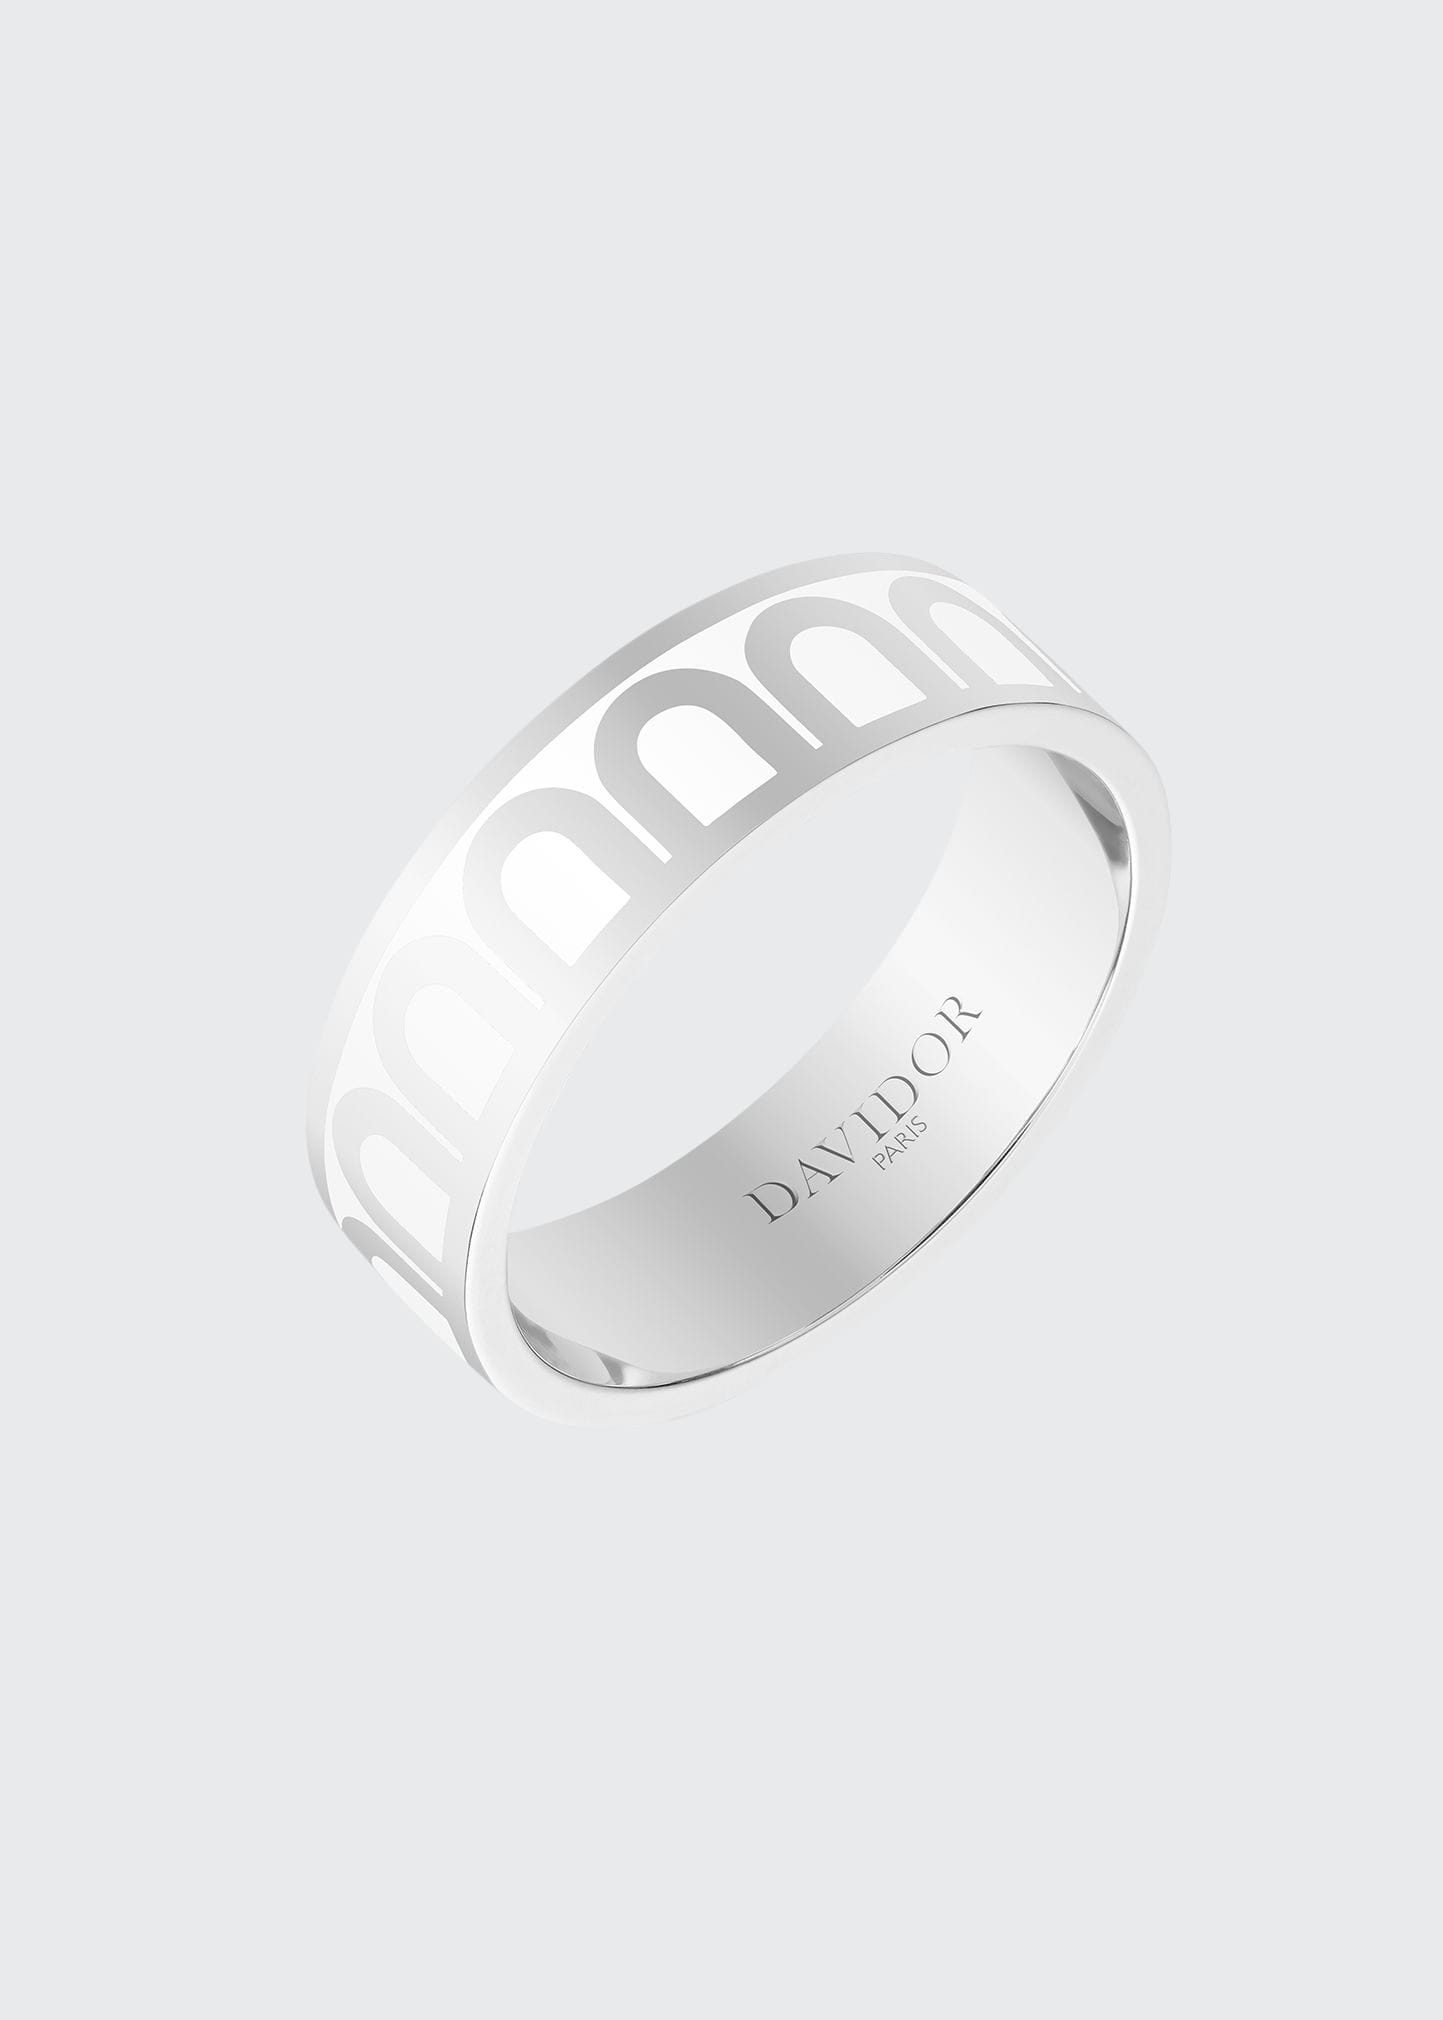 DAVIDOR L'Arc de Davidor 18k White Gold Ring - Med. Model, Neige, Size 54